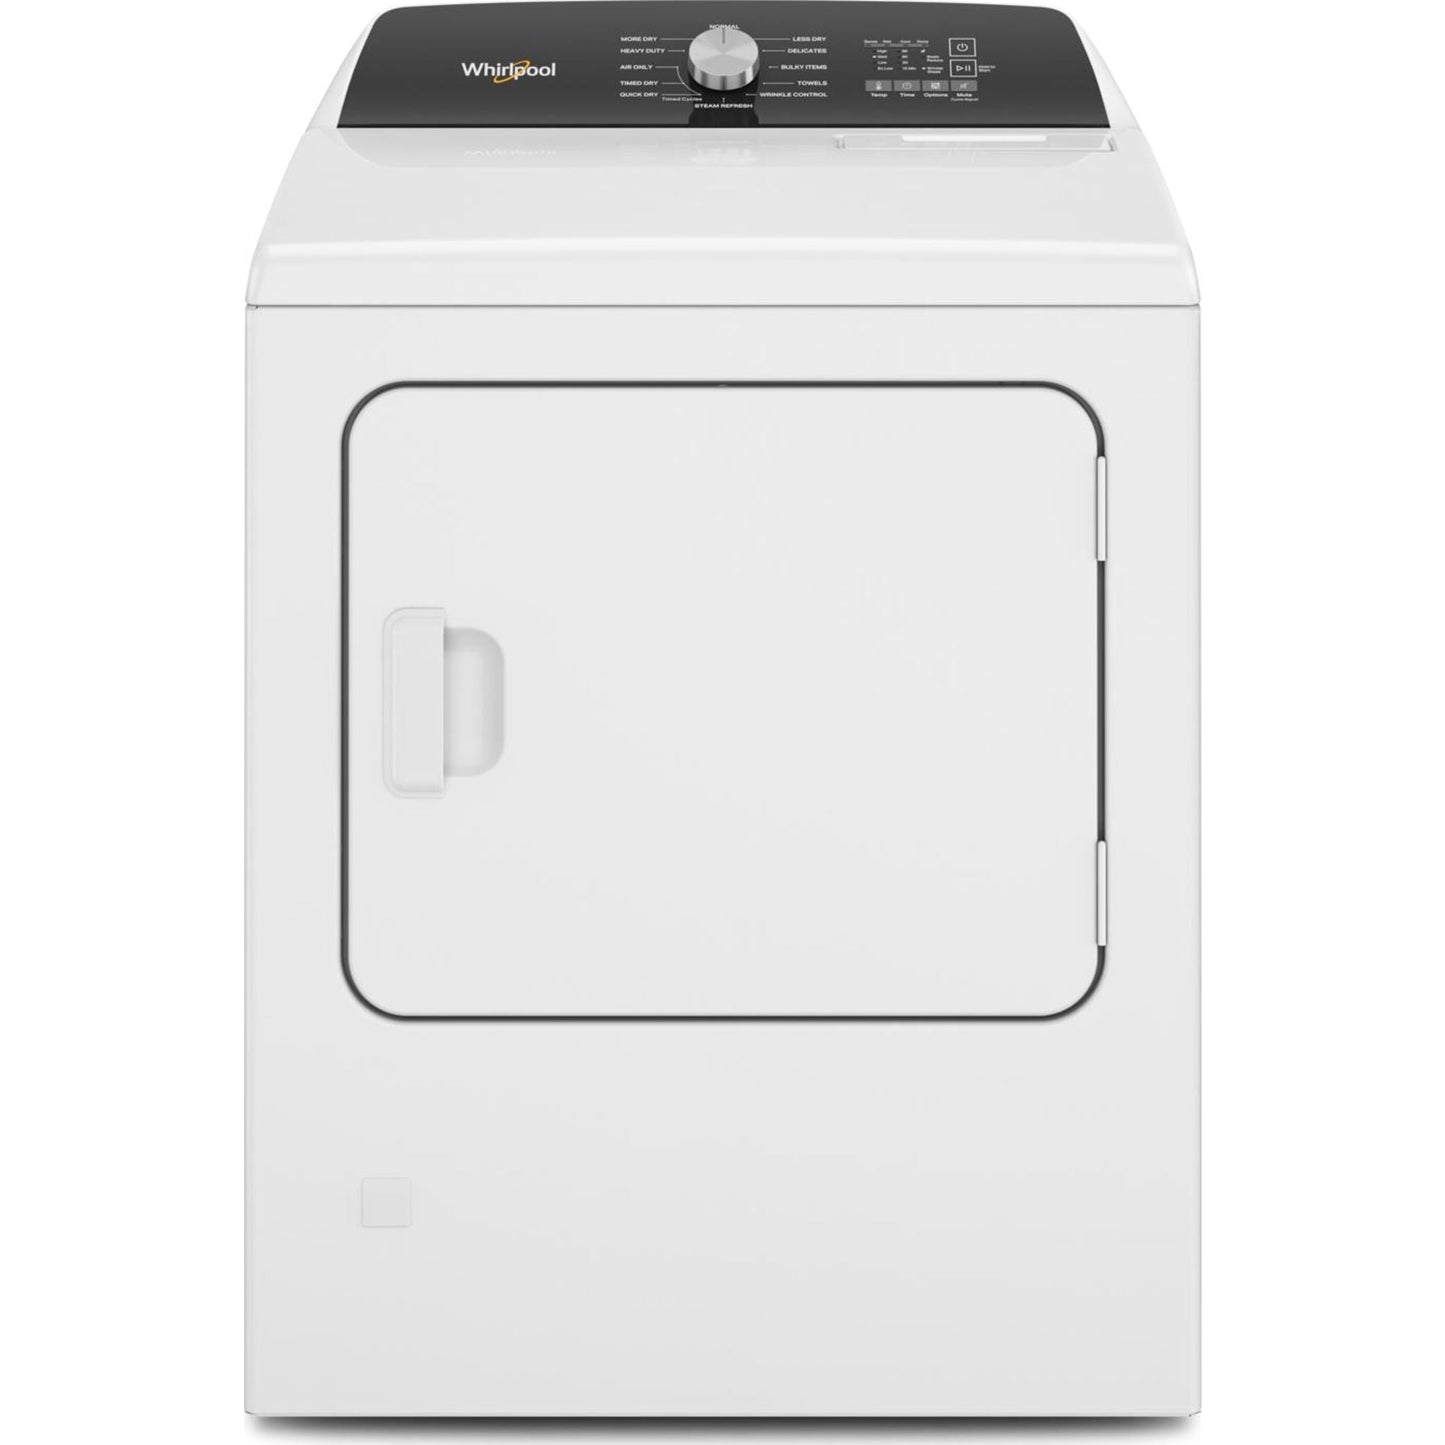 Whirlpool Dryer (WGD5050LW) - White